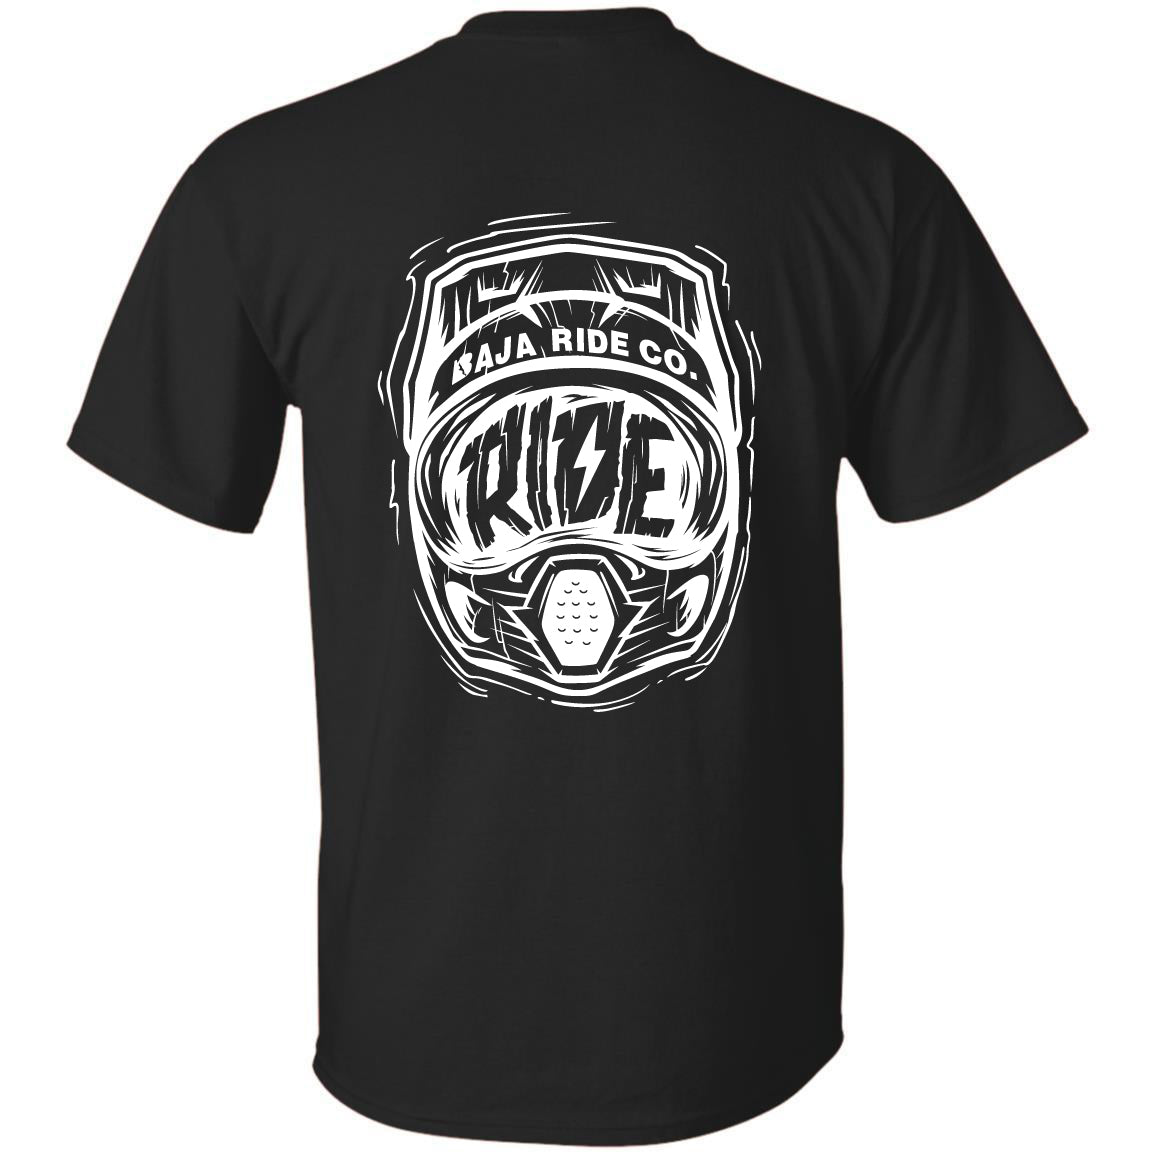 Baja Ride Co. "Helmet" T-Shirt